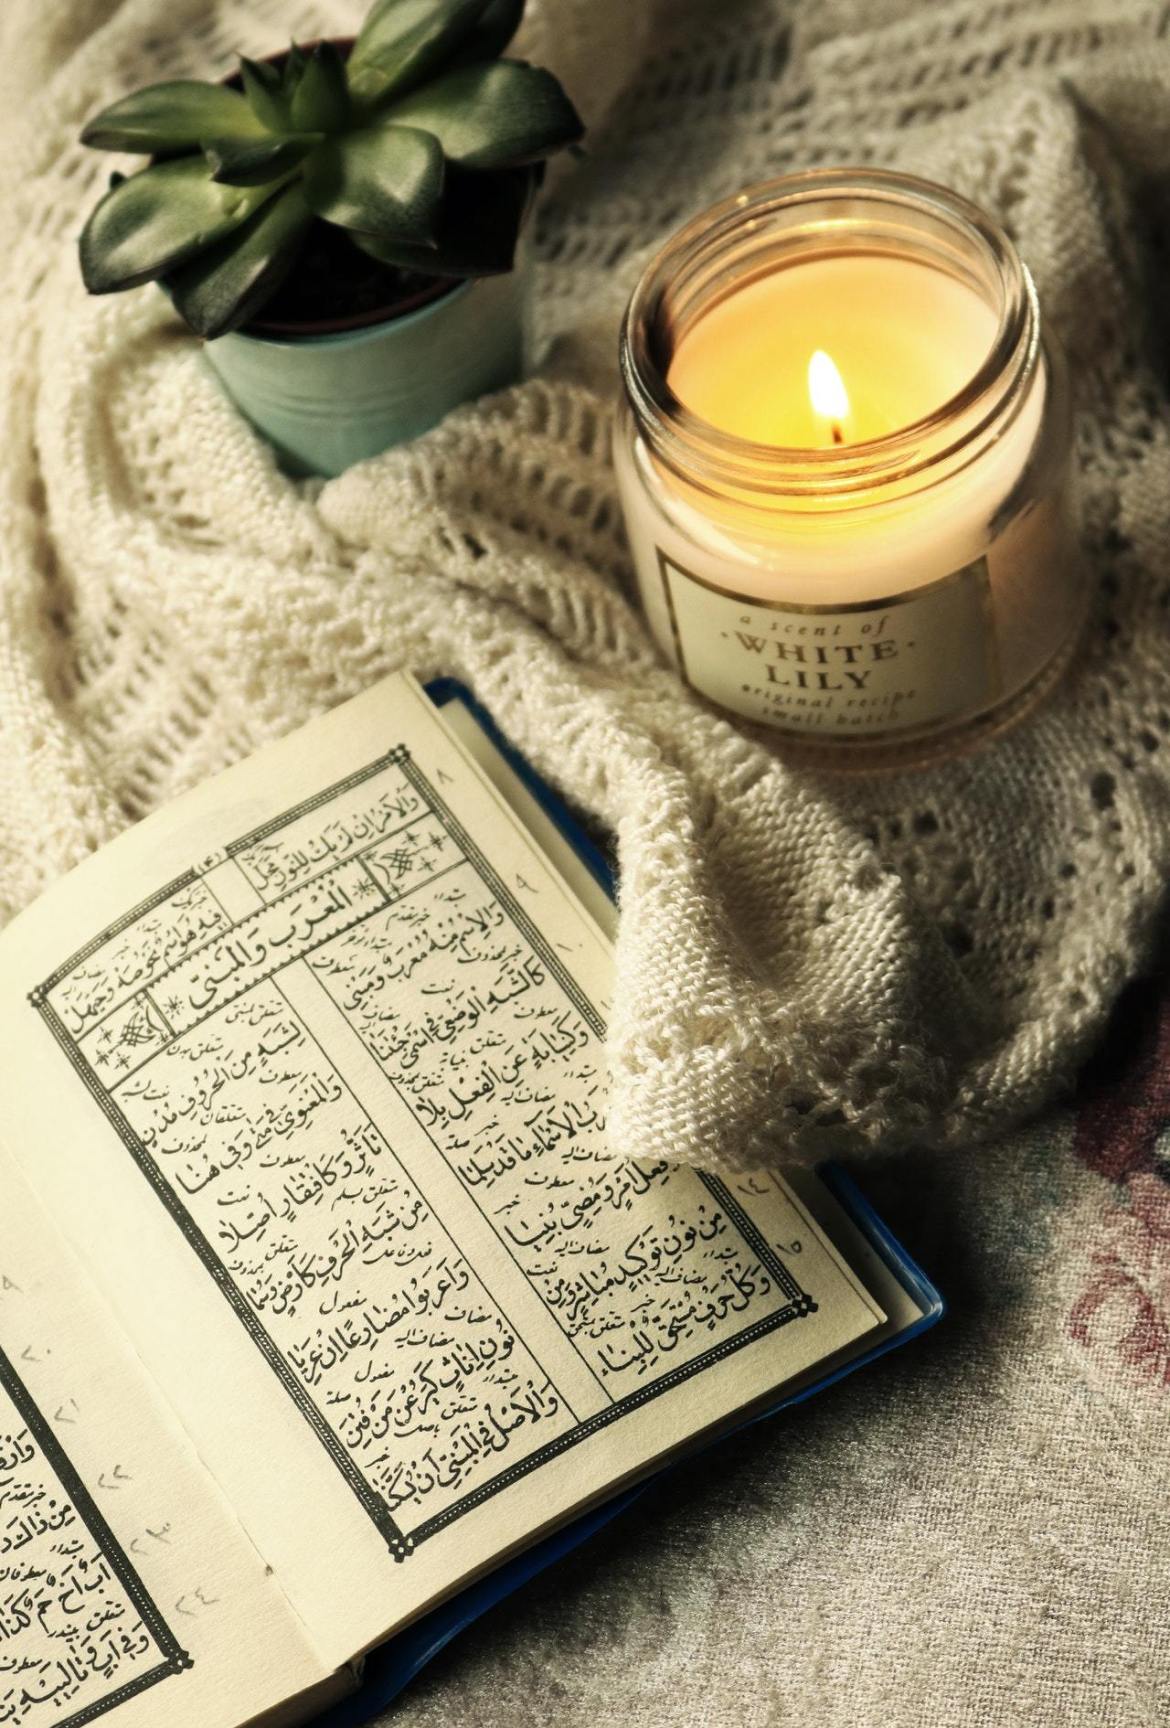 Salinan 10 ++ Kata-kata Bijak Islami Singkat